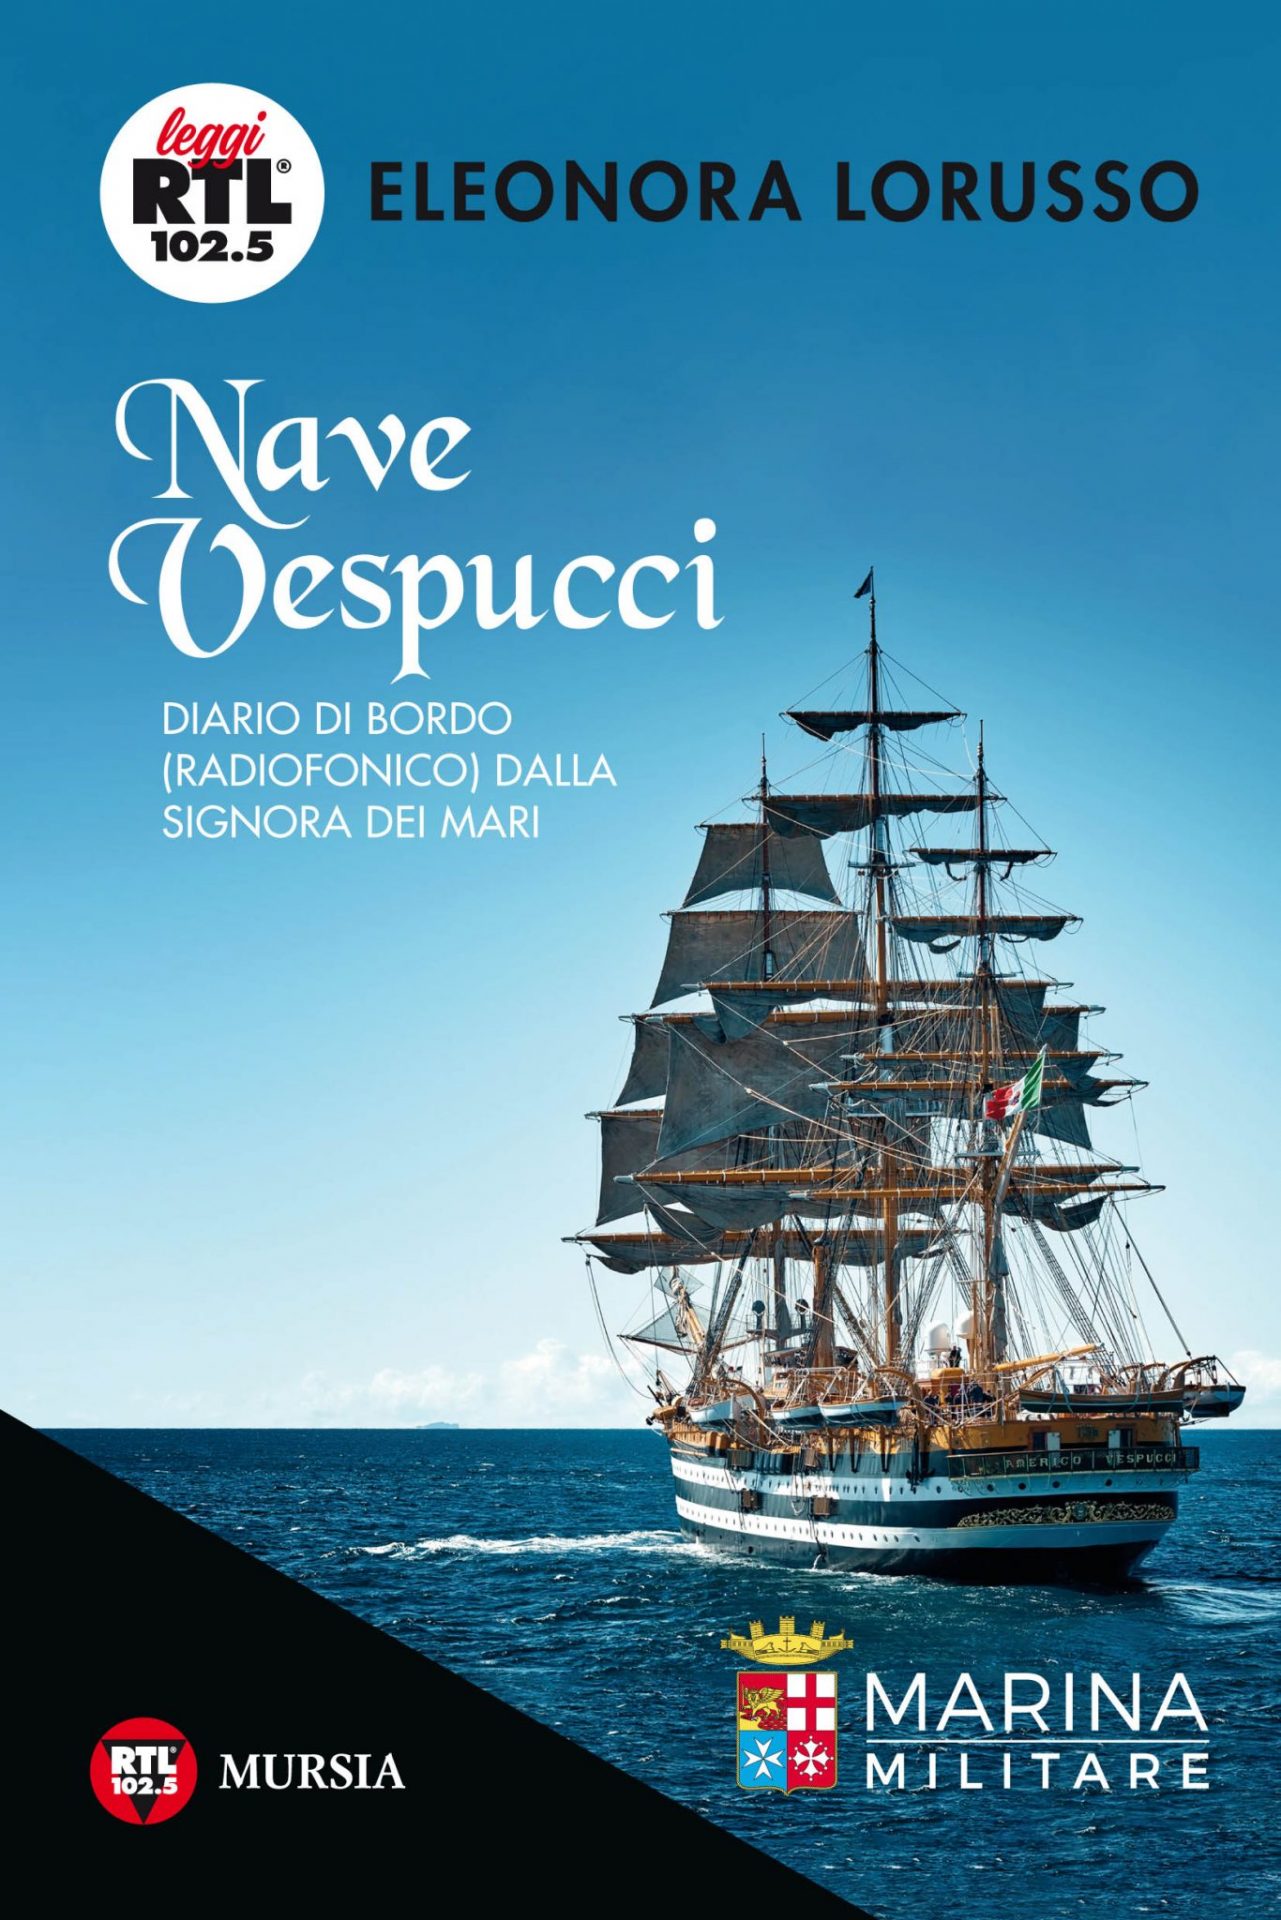 La copertina del libro "Nave Vespucci"